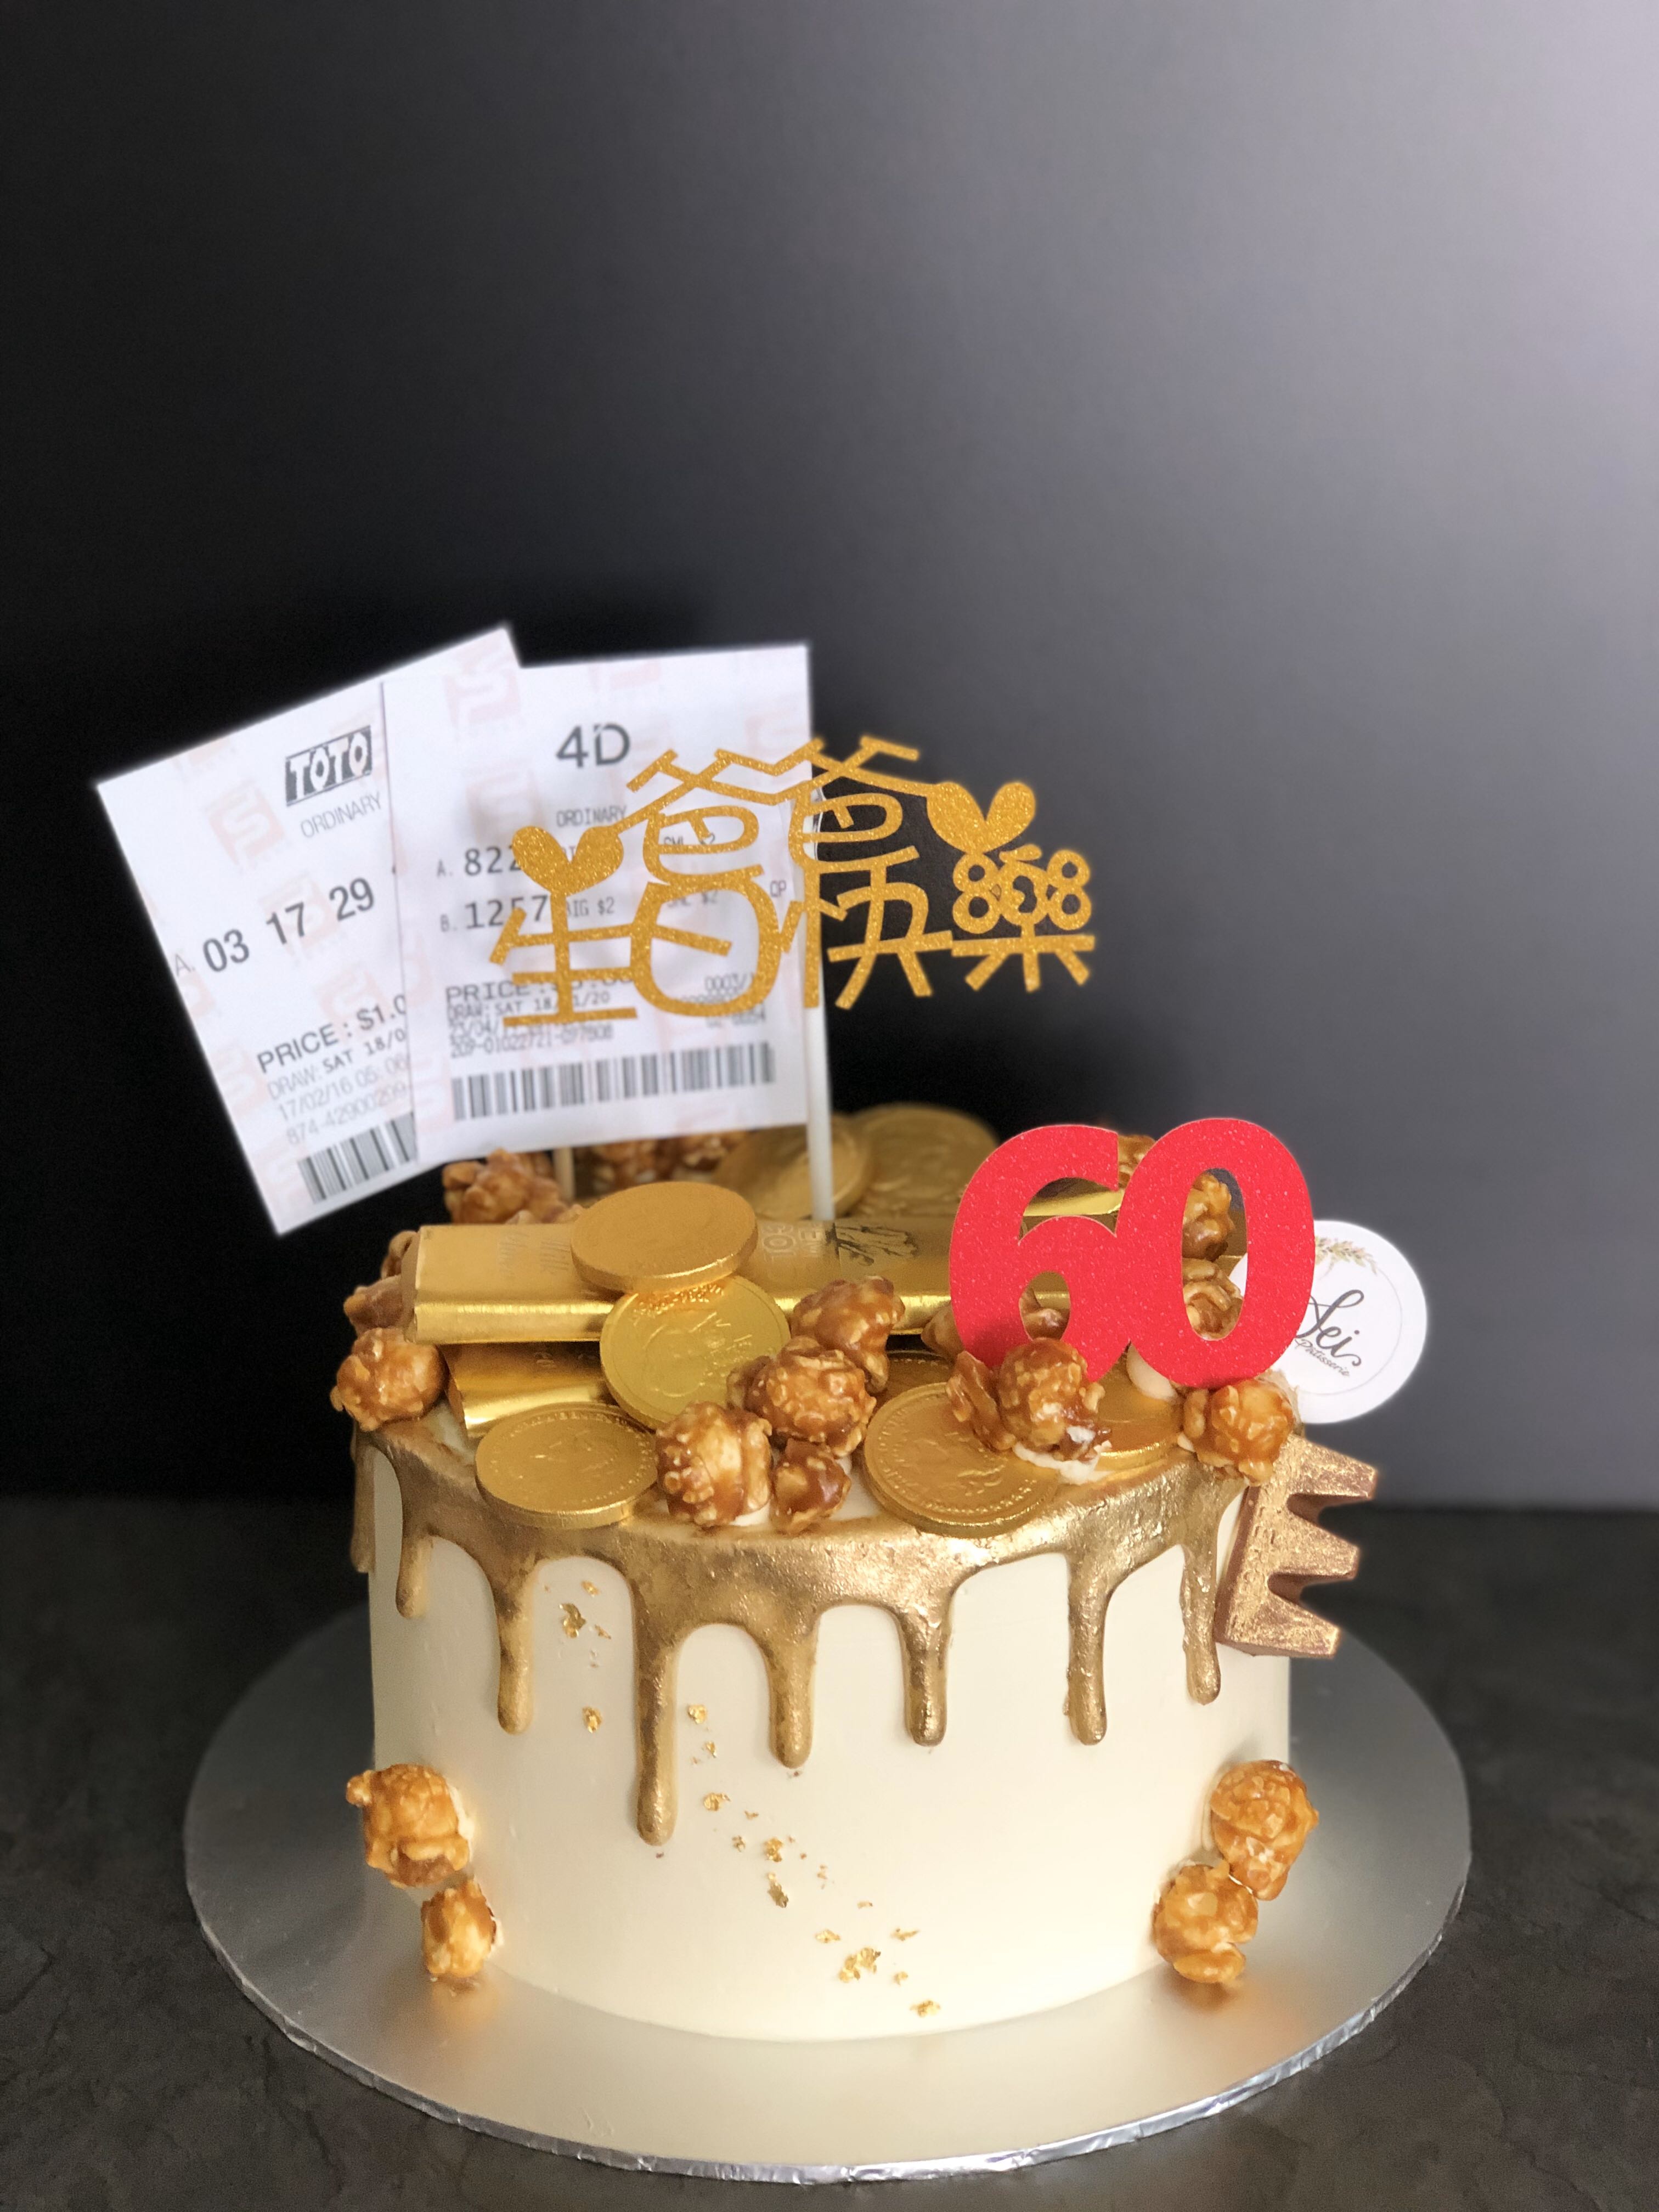 Gold bar money pulling cake, Food & Drinks, Homemade Bakes on Carousell